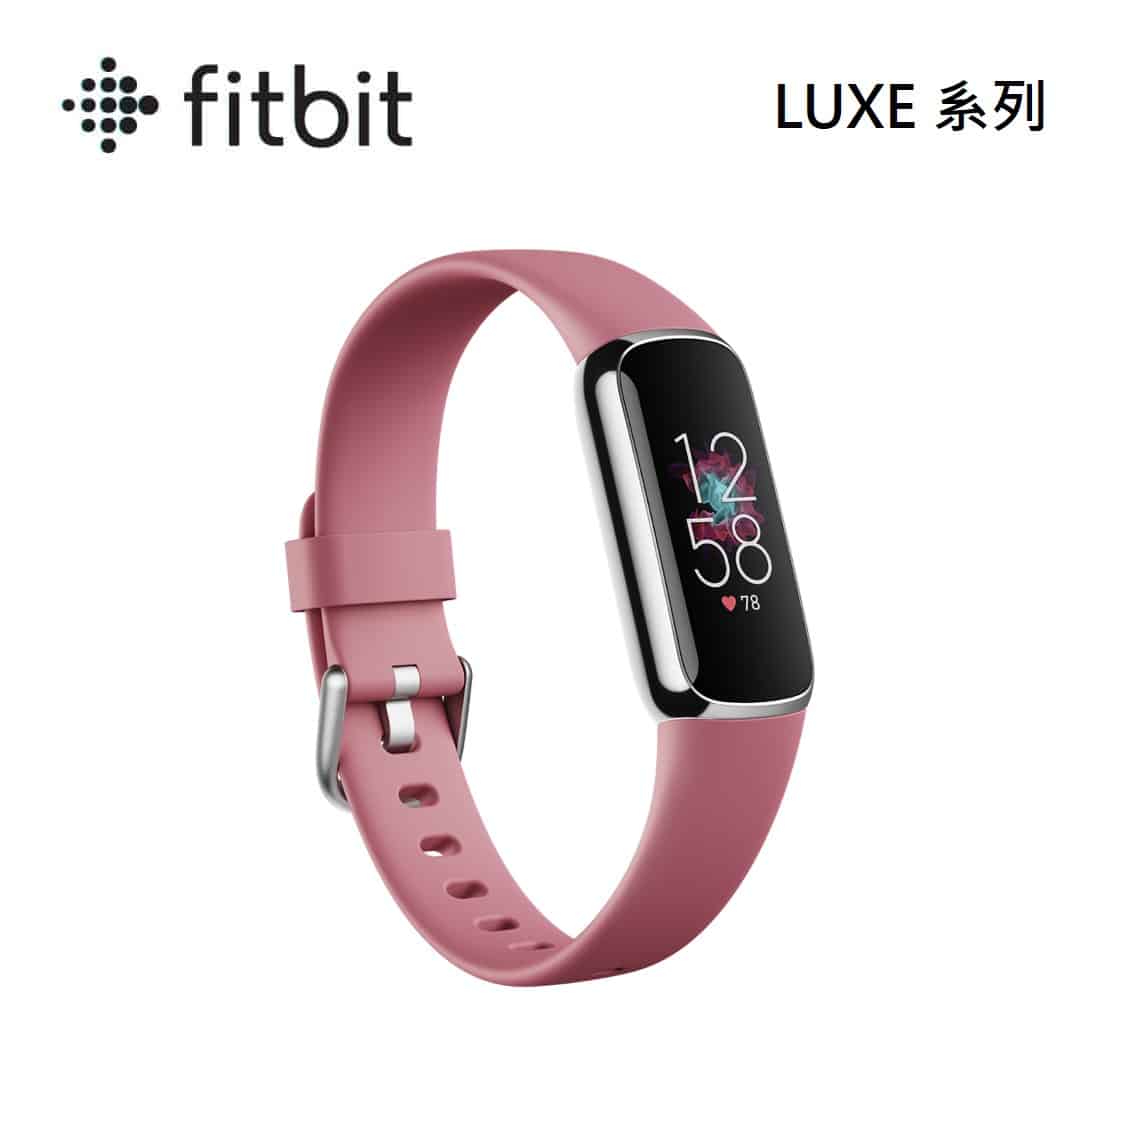 Fitbit Luxe 智慧手錶(兩色選) | 法雅客網路商店